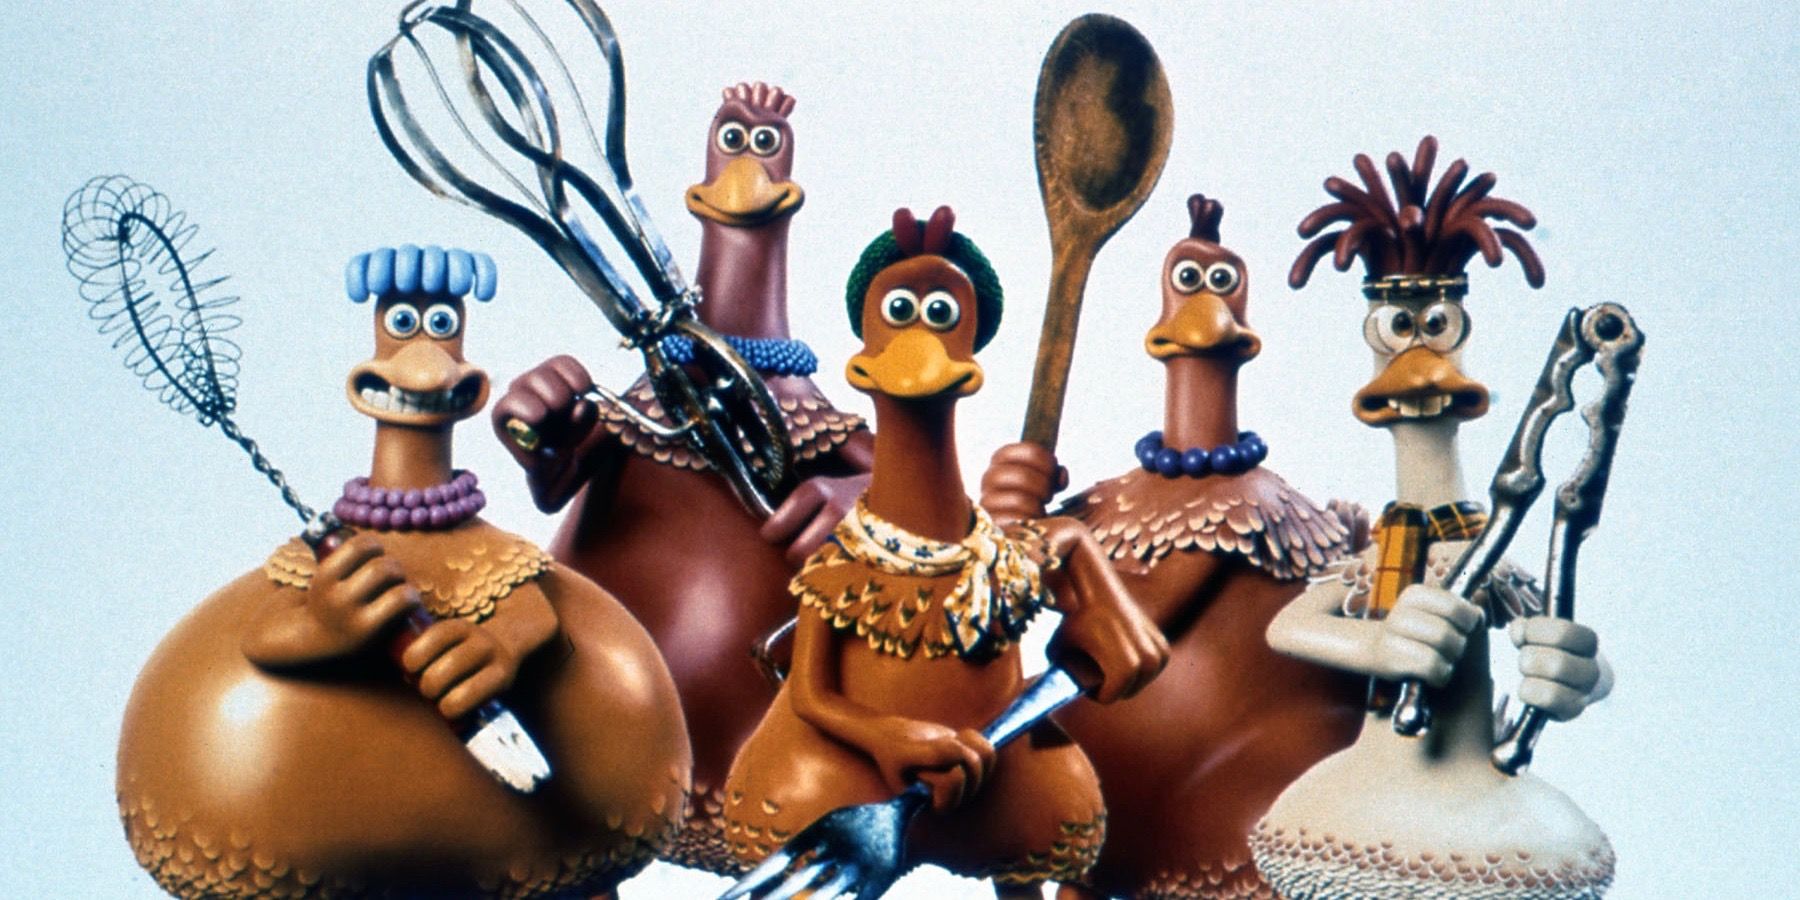 Chicken Run characters holding various kitchen utensils. 